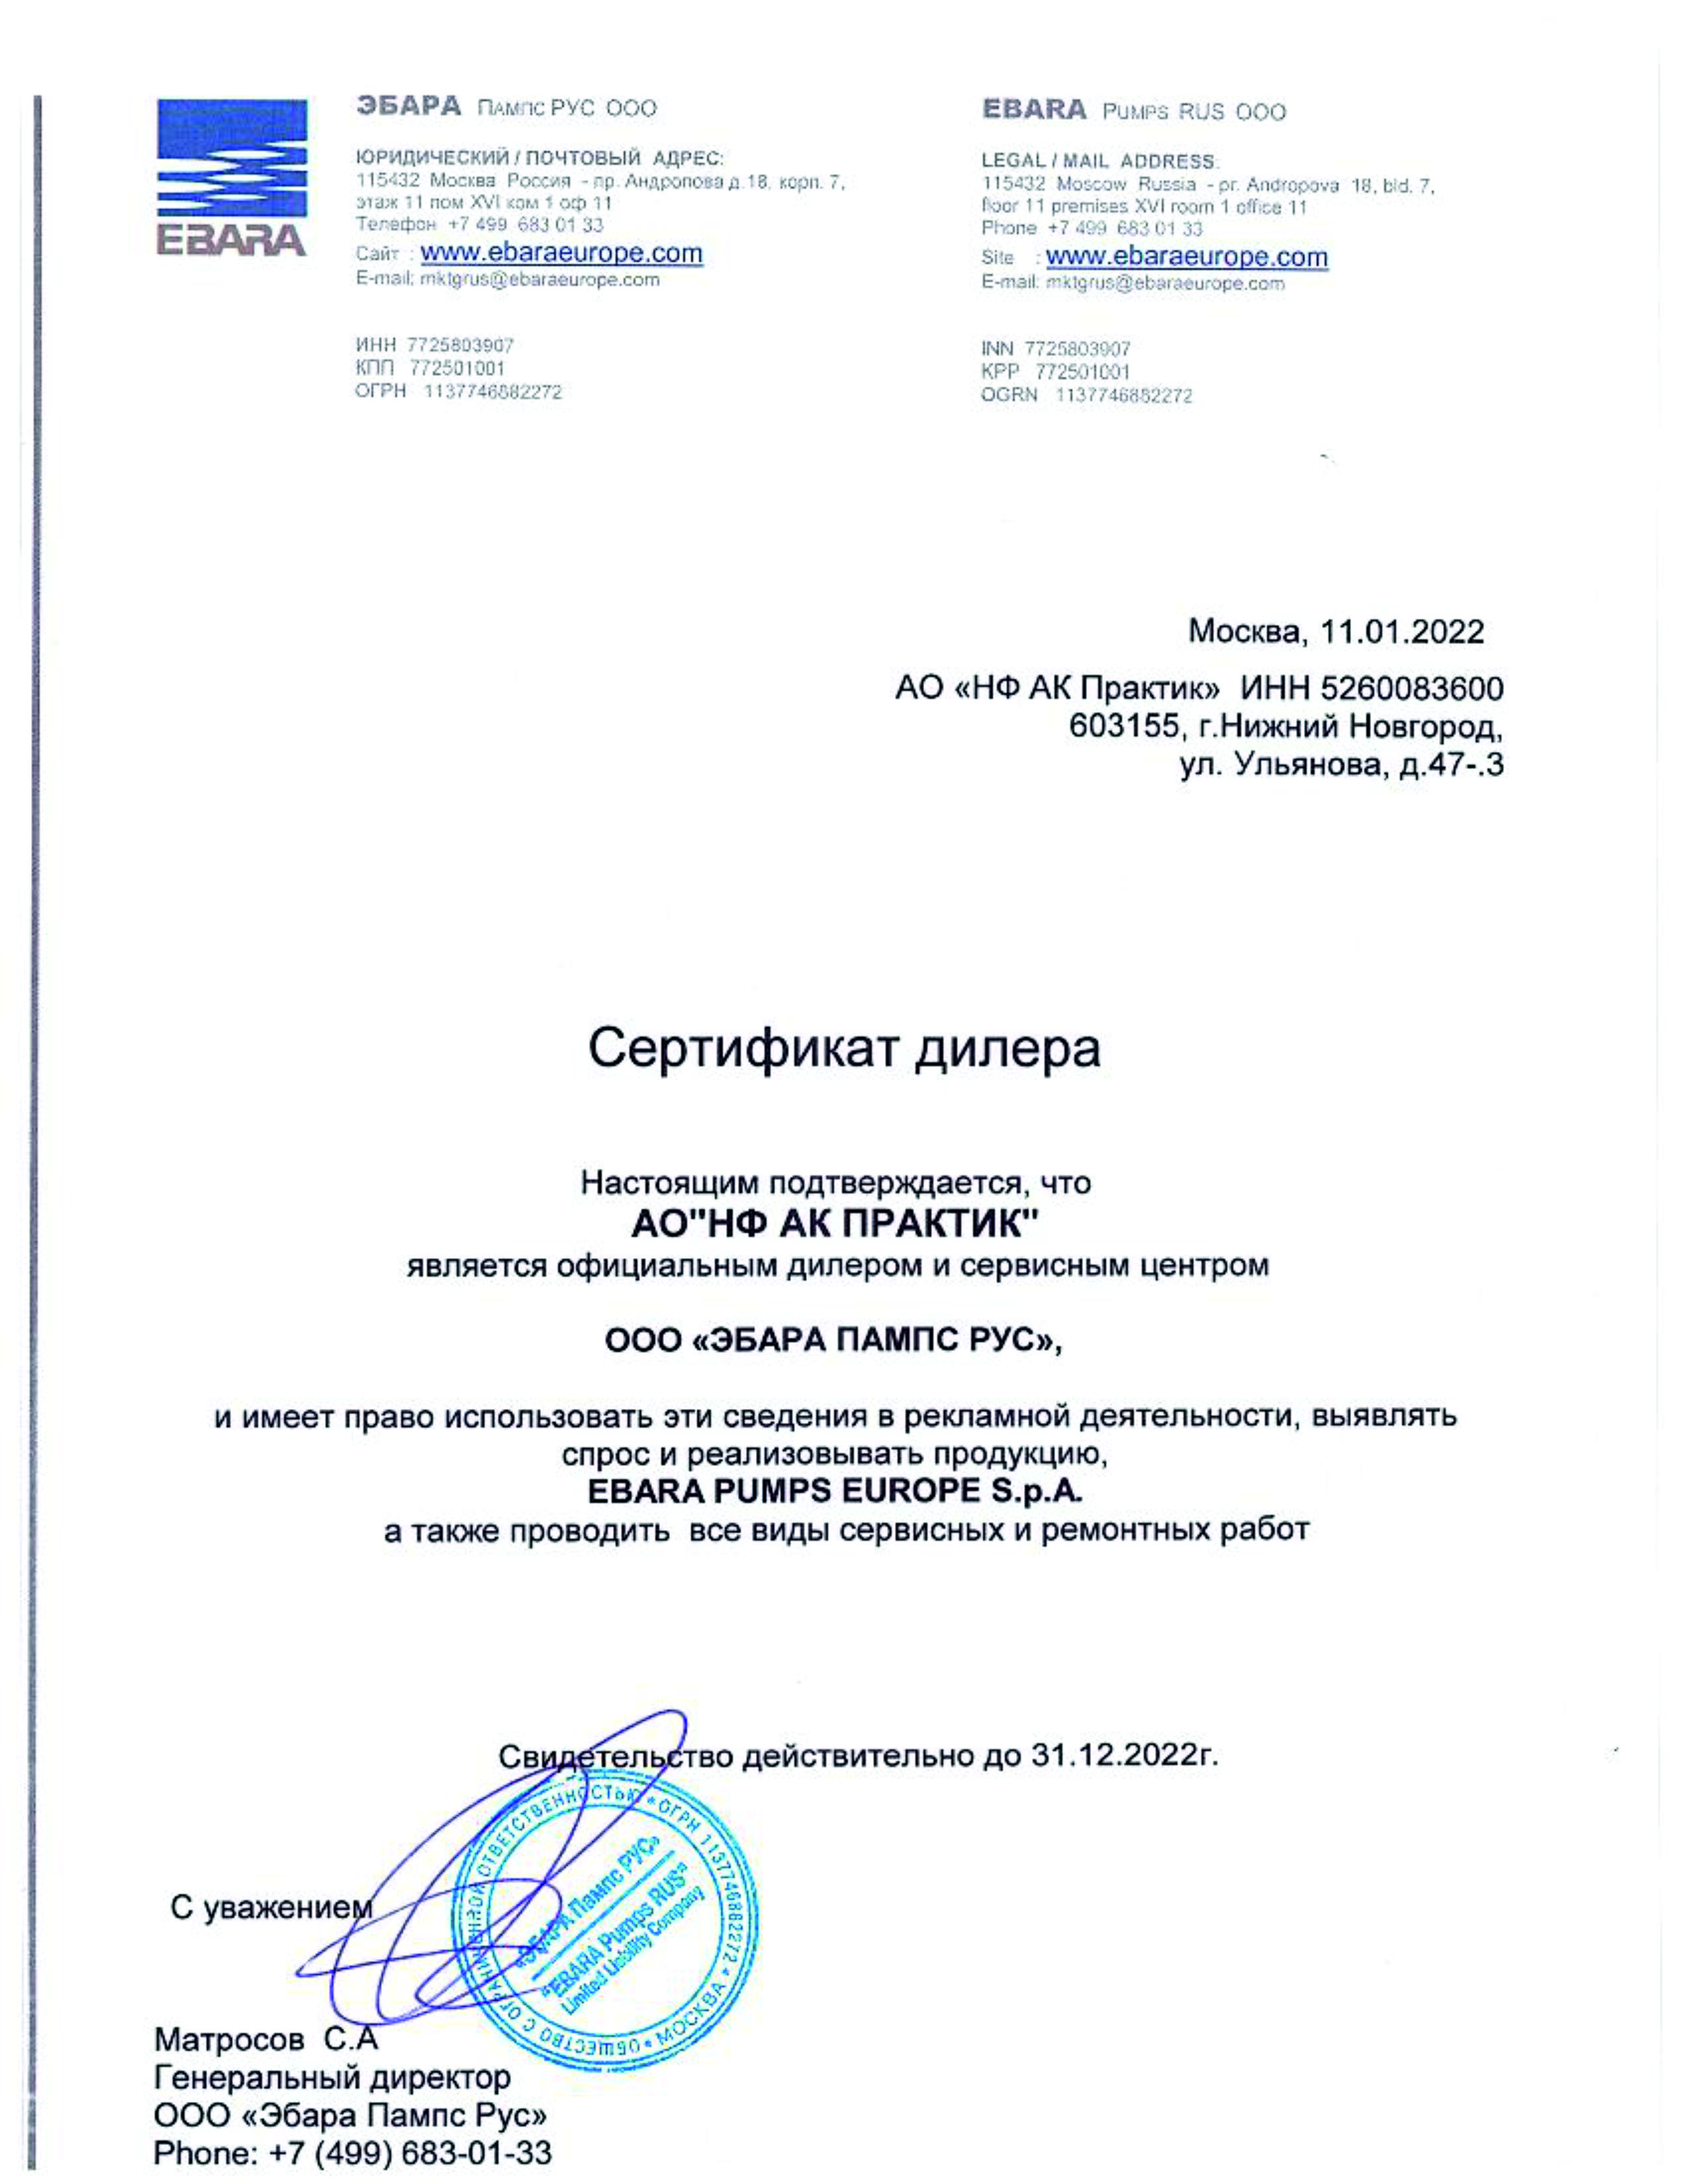 Сертификат дилера ООО "Эбара Пампс Рус"